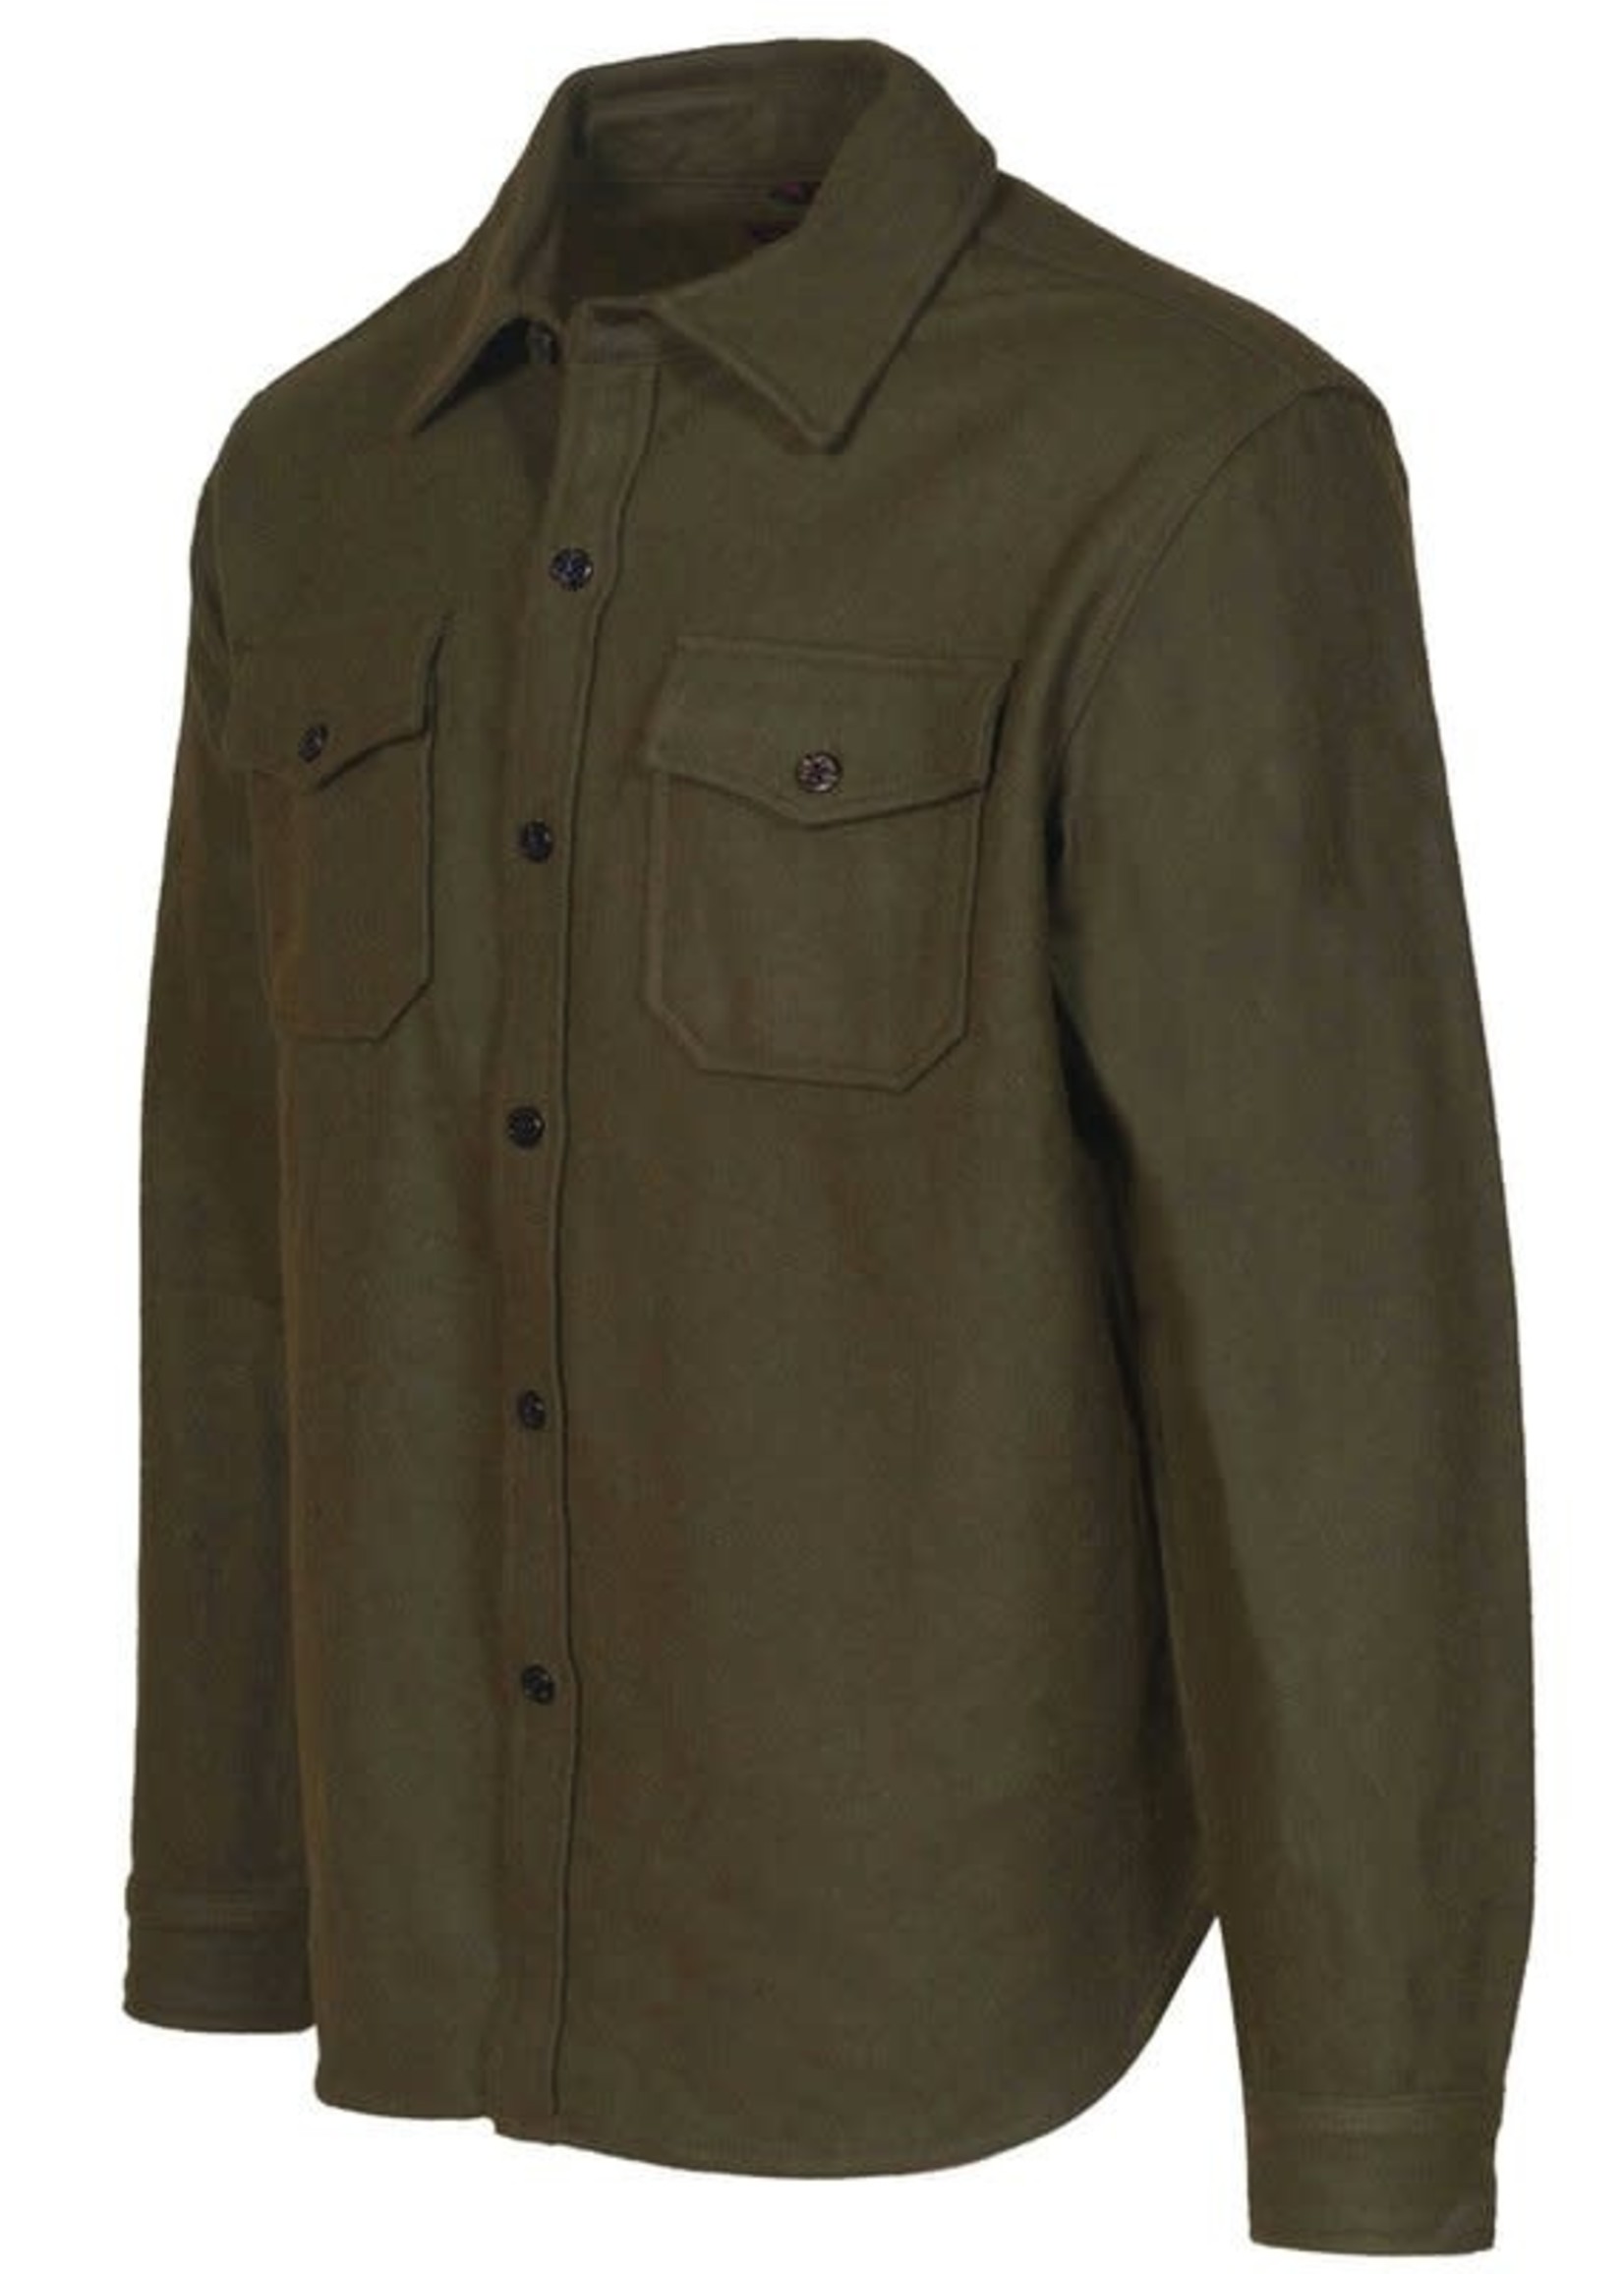 Schott Olive 20 oz Wool CPO Shirt Jacket